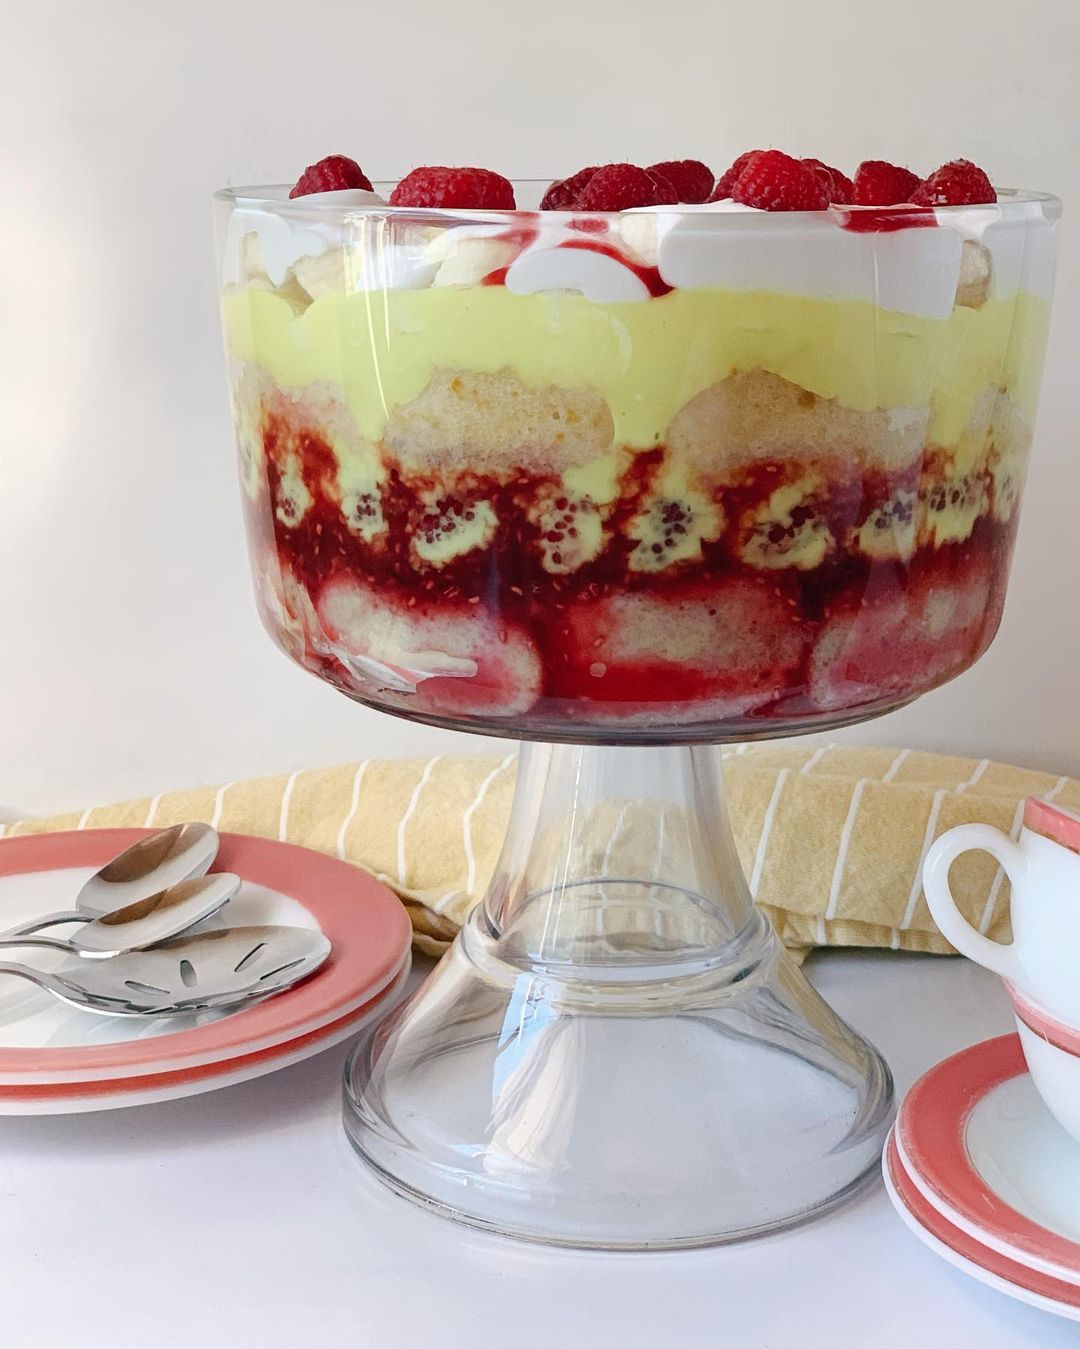 "Traditional" English Trifle Veganized